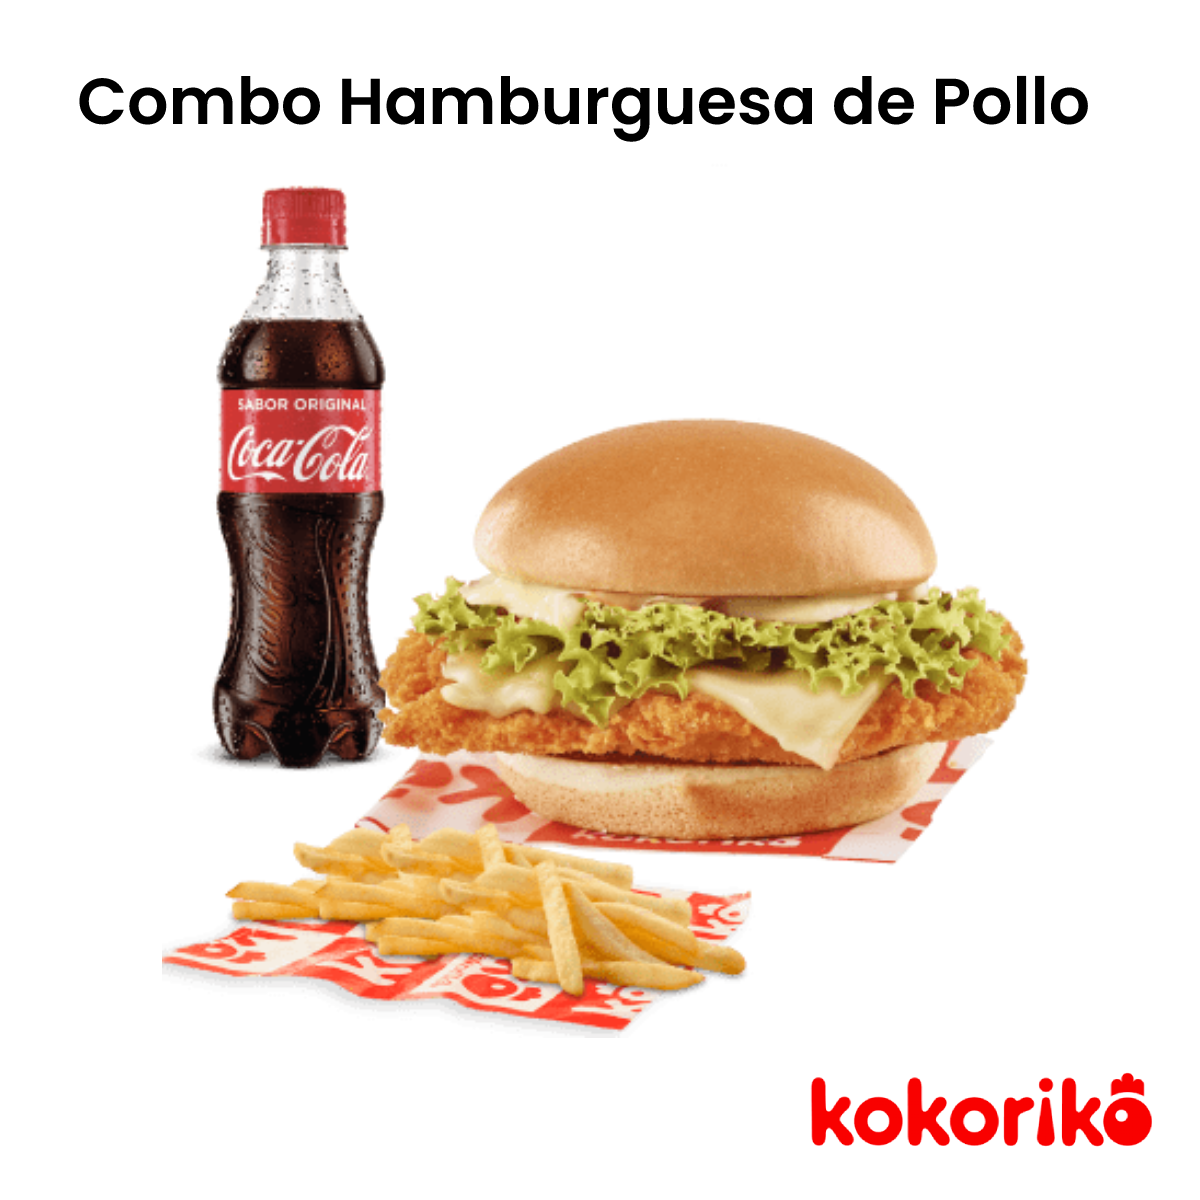 Bono Combo Hamburguesa de Pollo - Kokoriko